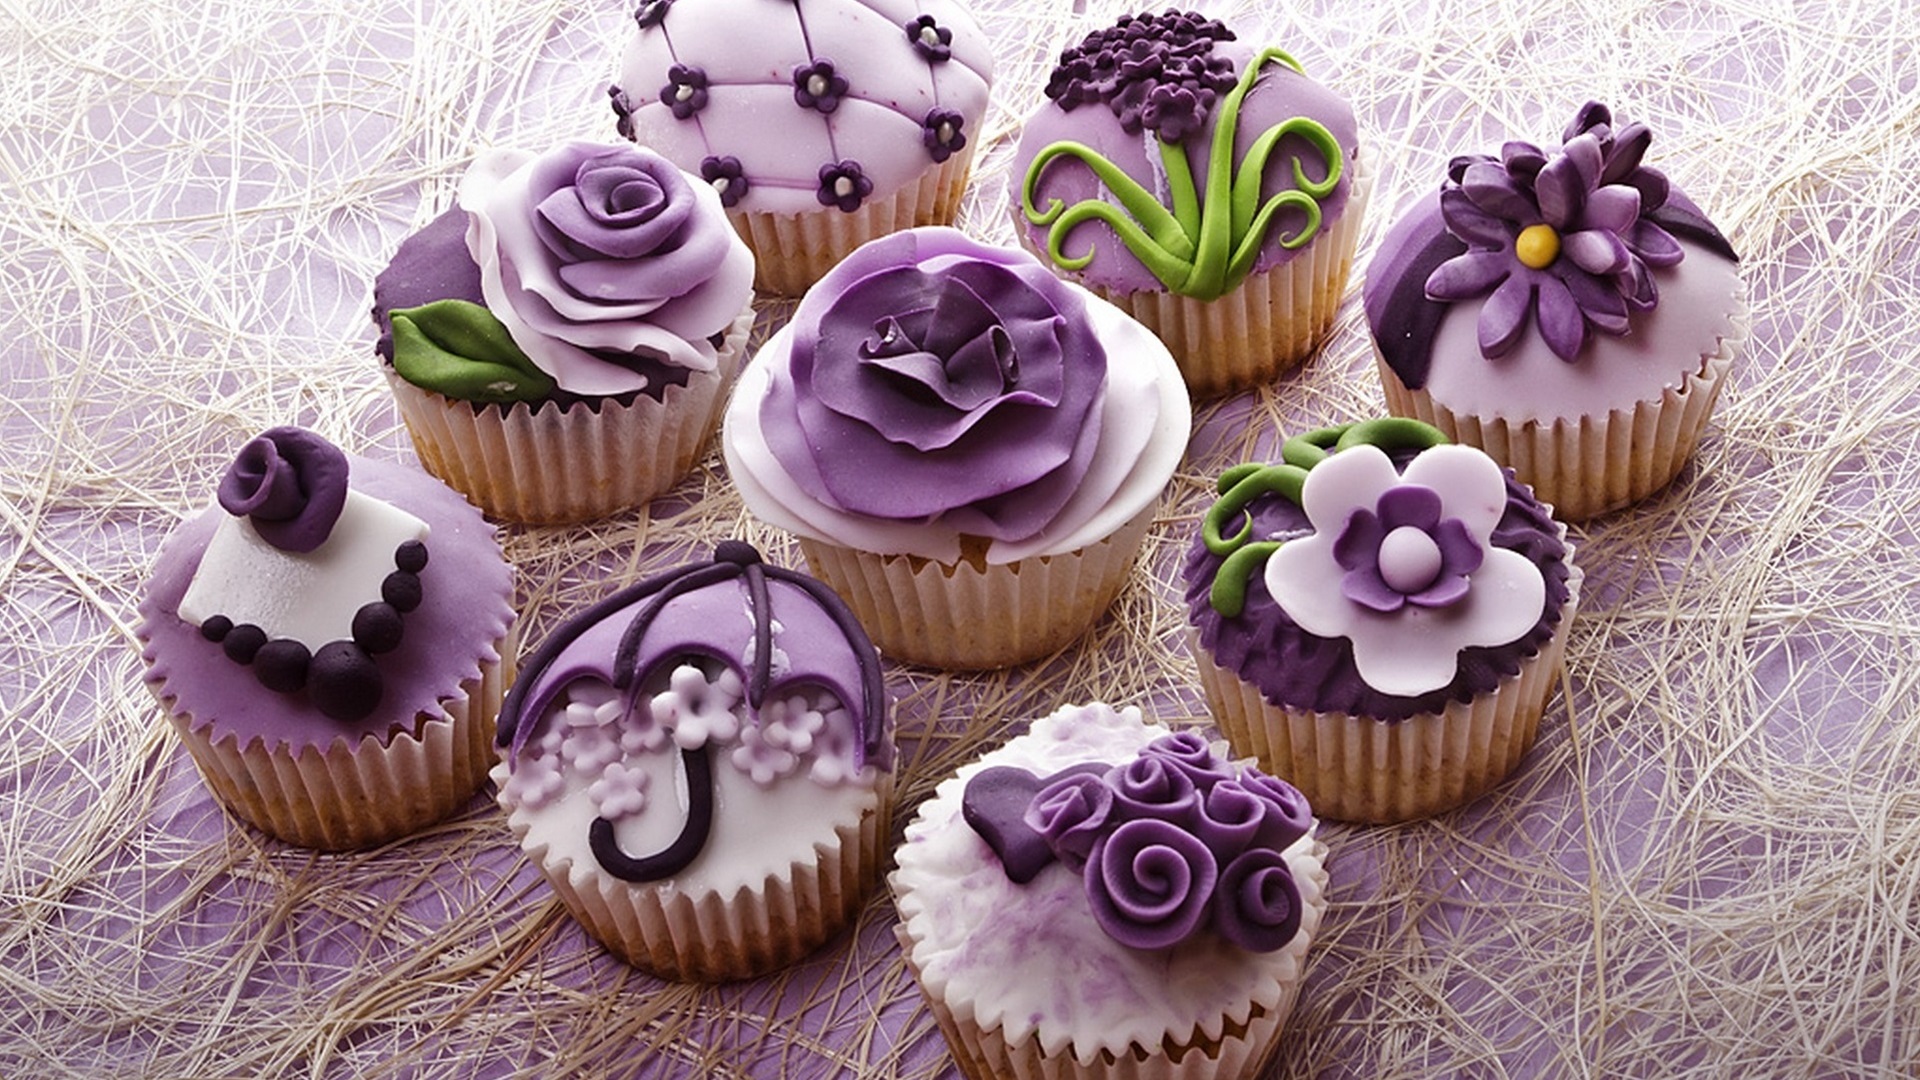 General 1920x1080 sweets food muffins purple white dessert